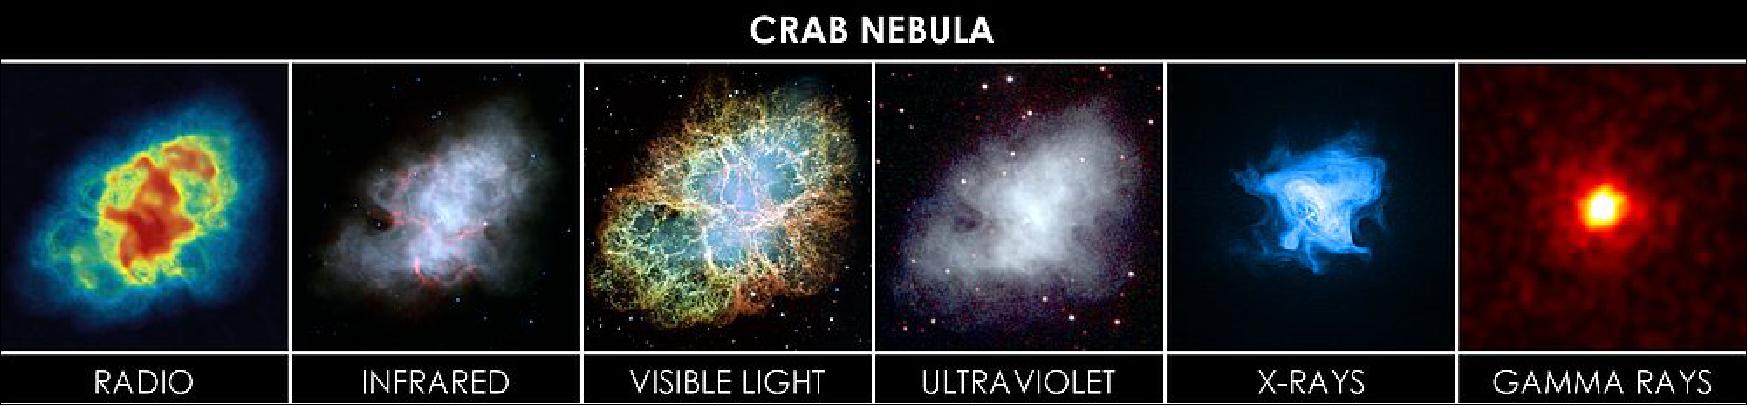 Figure 5: The Crab Nebula in radio, infrared, visible ultraviolet, X-ray and gamma-ray wavelengths [Sources: Radio: NRAO/AI and M. Bietenholz, J. M. Uson, T. J. Cornwell; Infrared: NASA/JPL-Caltech/R. Gehrz (University of Minnesota); Visible: NASA, ESA, J. Hester and A. Loll (Arizona State University); Ultraviolet: NASA/Swift/E. Hoversten, PSU; X-ray: NASA/CXC/SAO/F. Seward et al.; Gamma-ray: NASA/DOE/Fermi LAT/ R. Buehler]